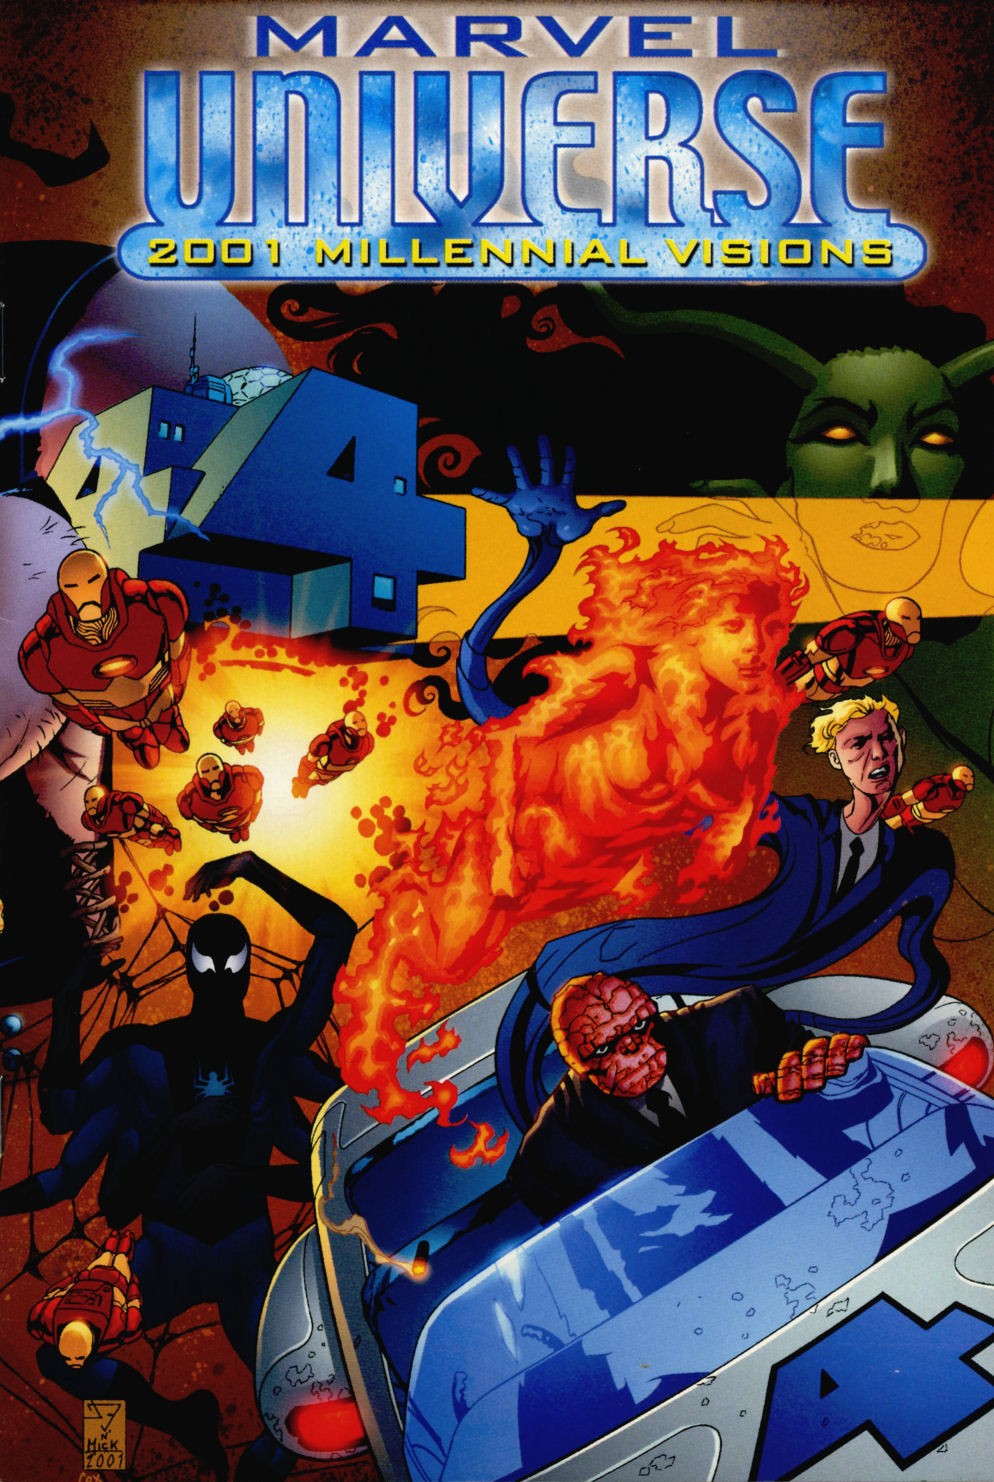 Marvel Universe 2001 Millennial Visions Vol. 1 #1